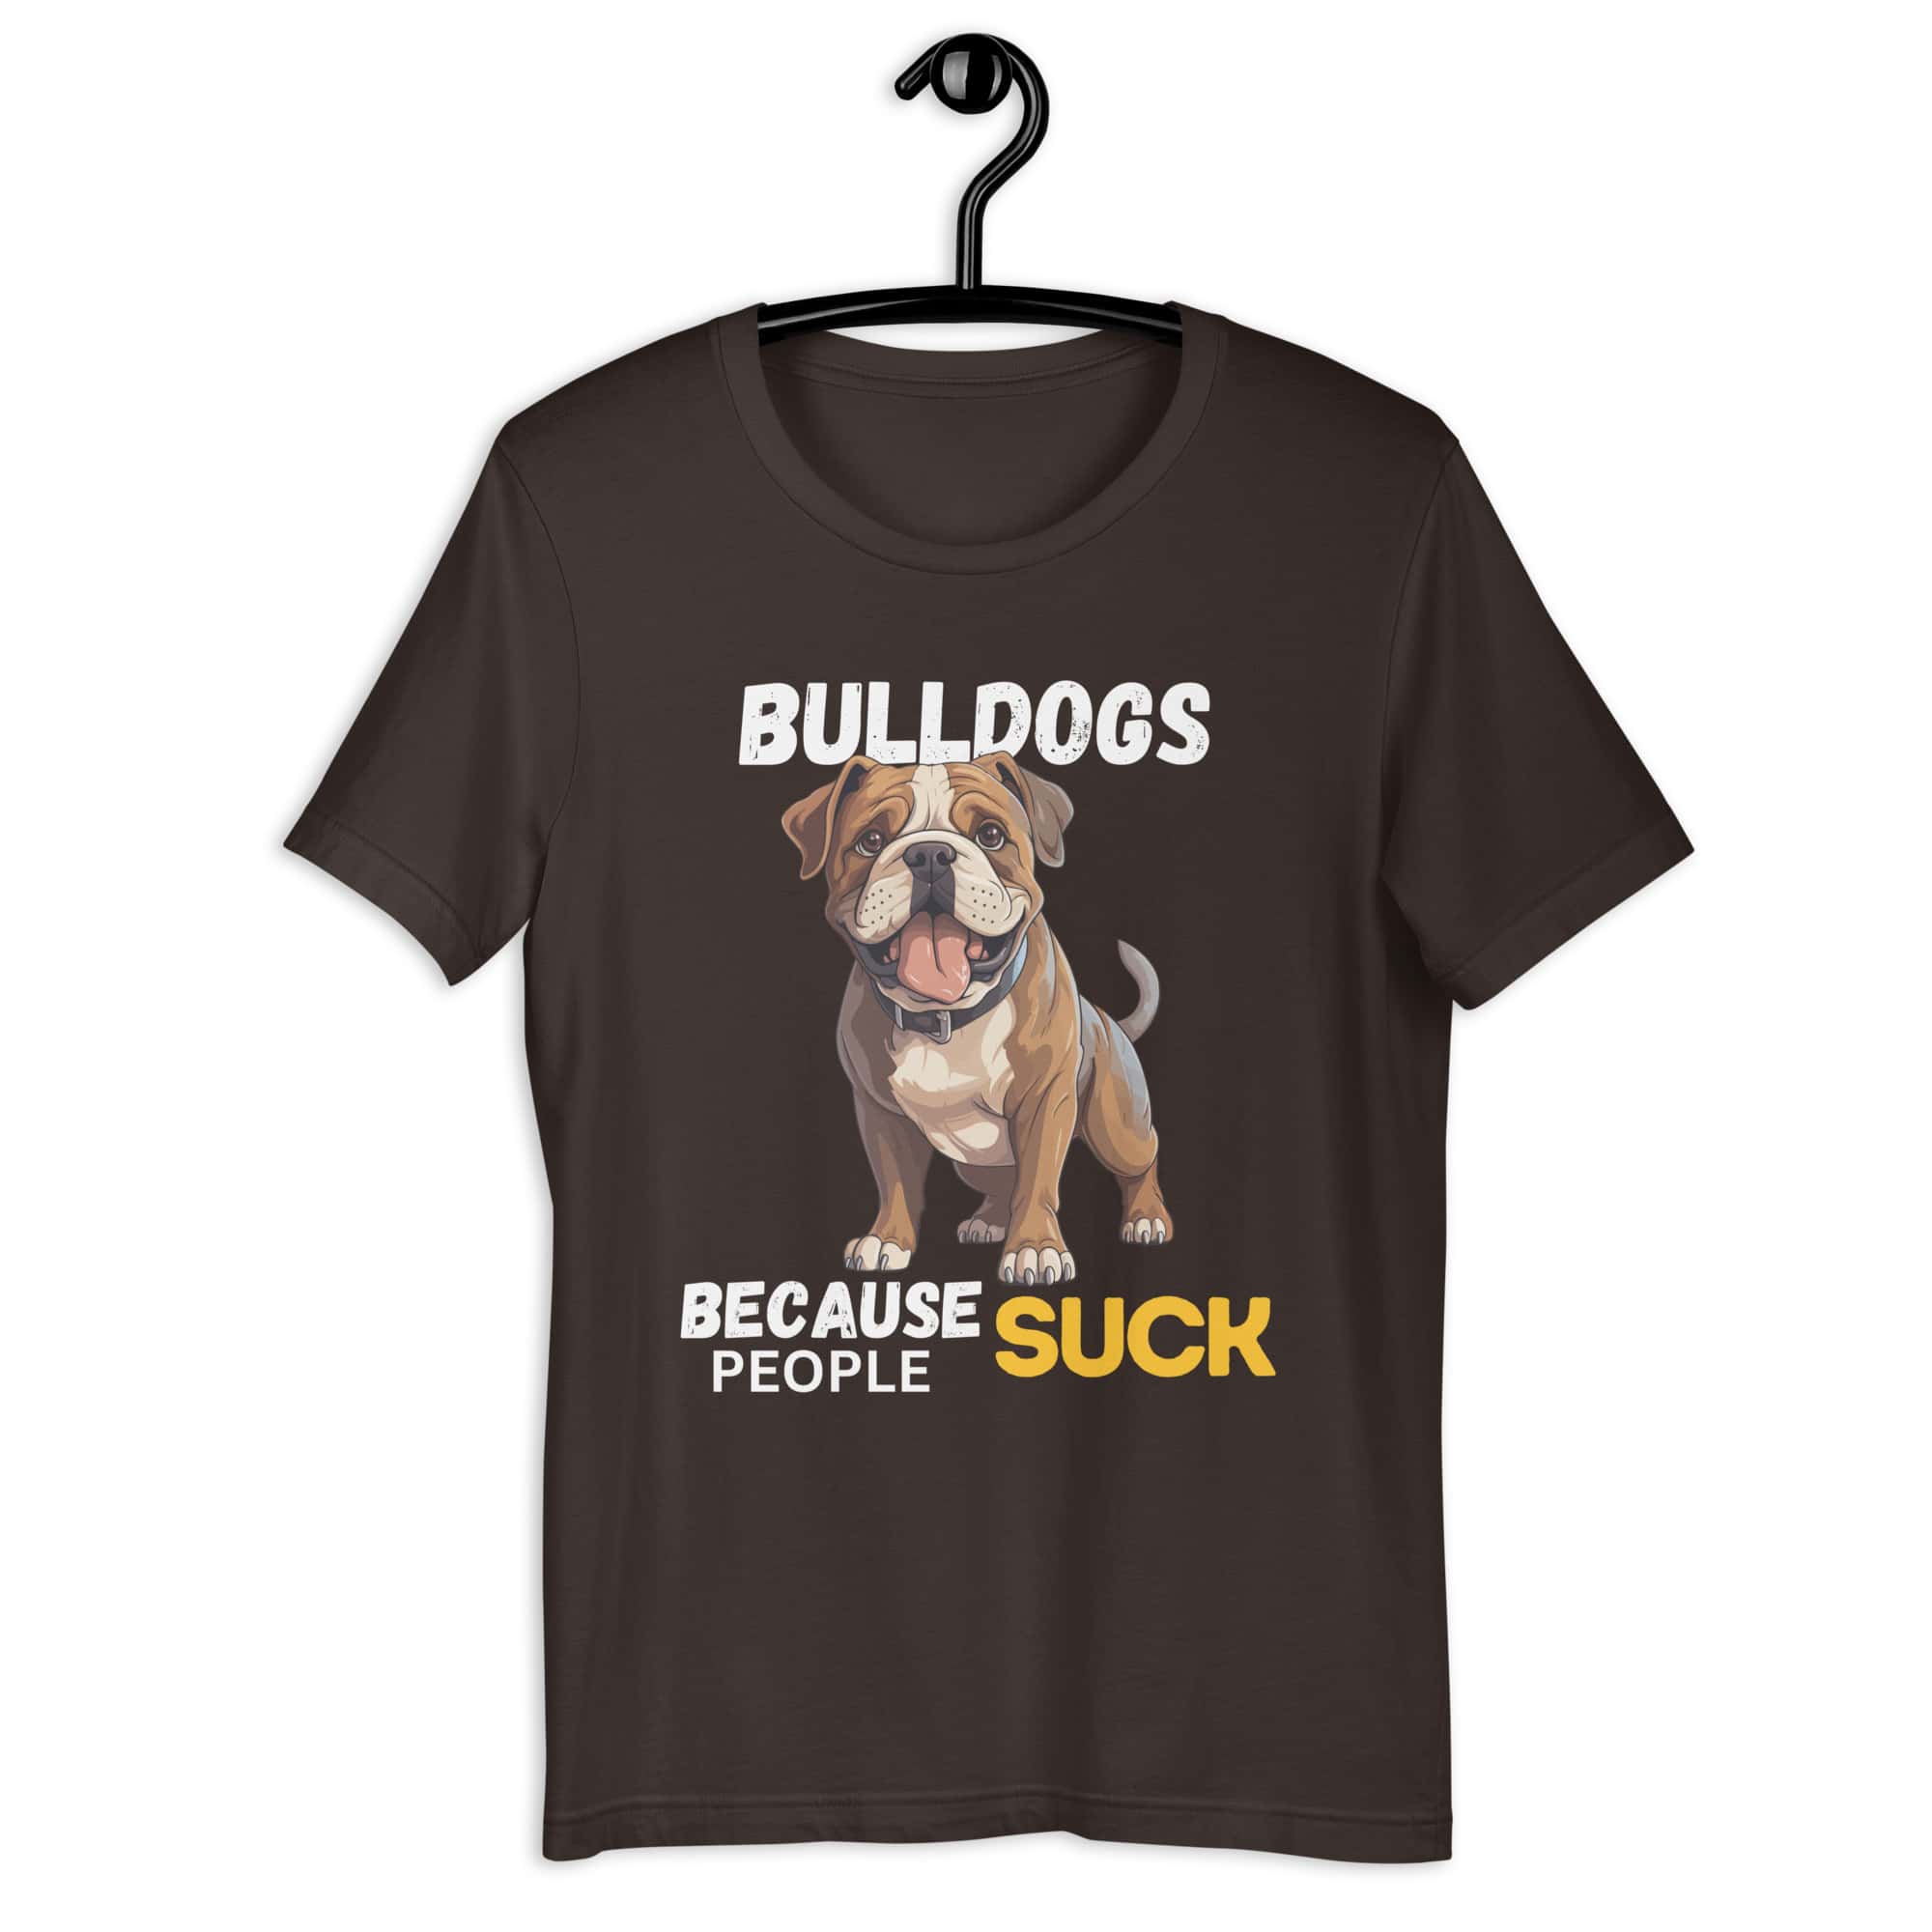 Bulldogs Because People Suck Unisex T-Shirt brown